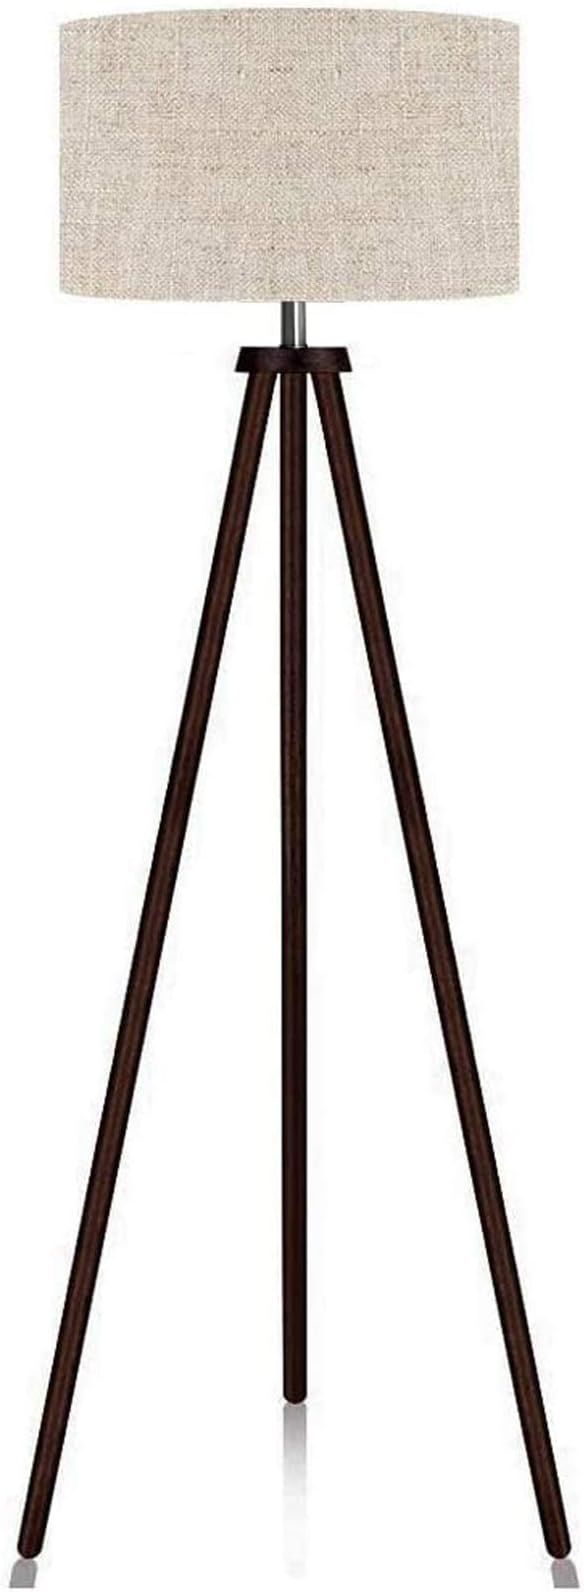 LEPOWER Wood Tripod Floor Lamp, Mid Century Standing Lamp, Standard E26 Lamp Base, Modern Design ... | Amazon (US)